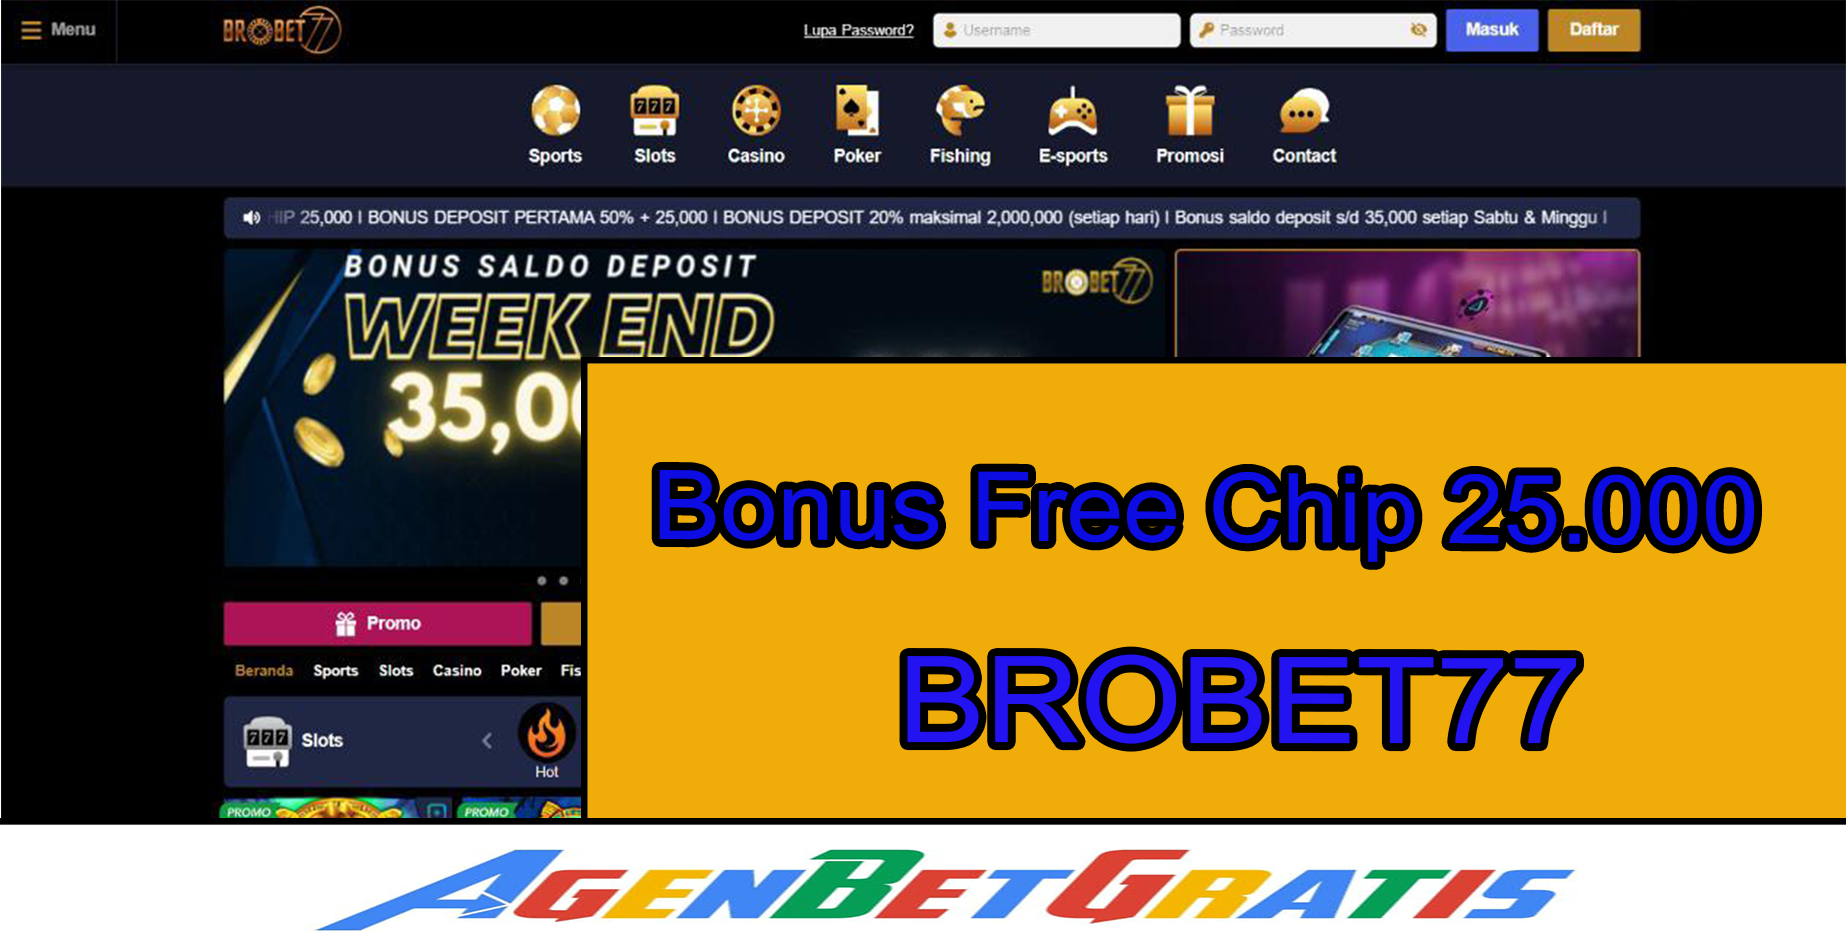 BROBET77 - Bonus Free Chip 25.000